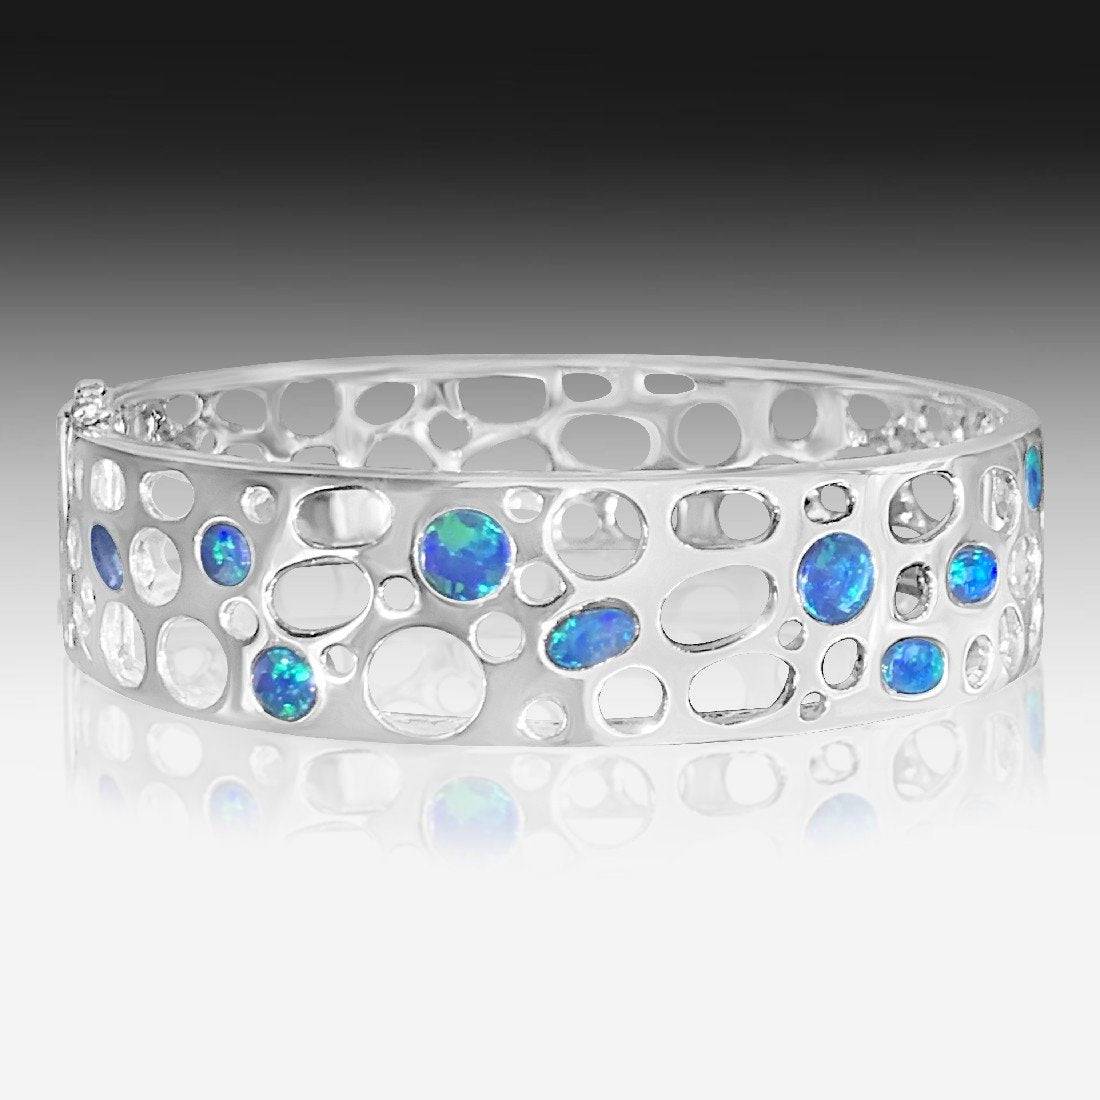 Sterling Silver Bangle with Opals - Masterpiece Jewellery Opal & Gems Sydney Australia | Online Shop